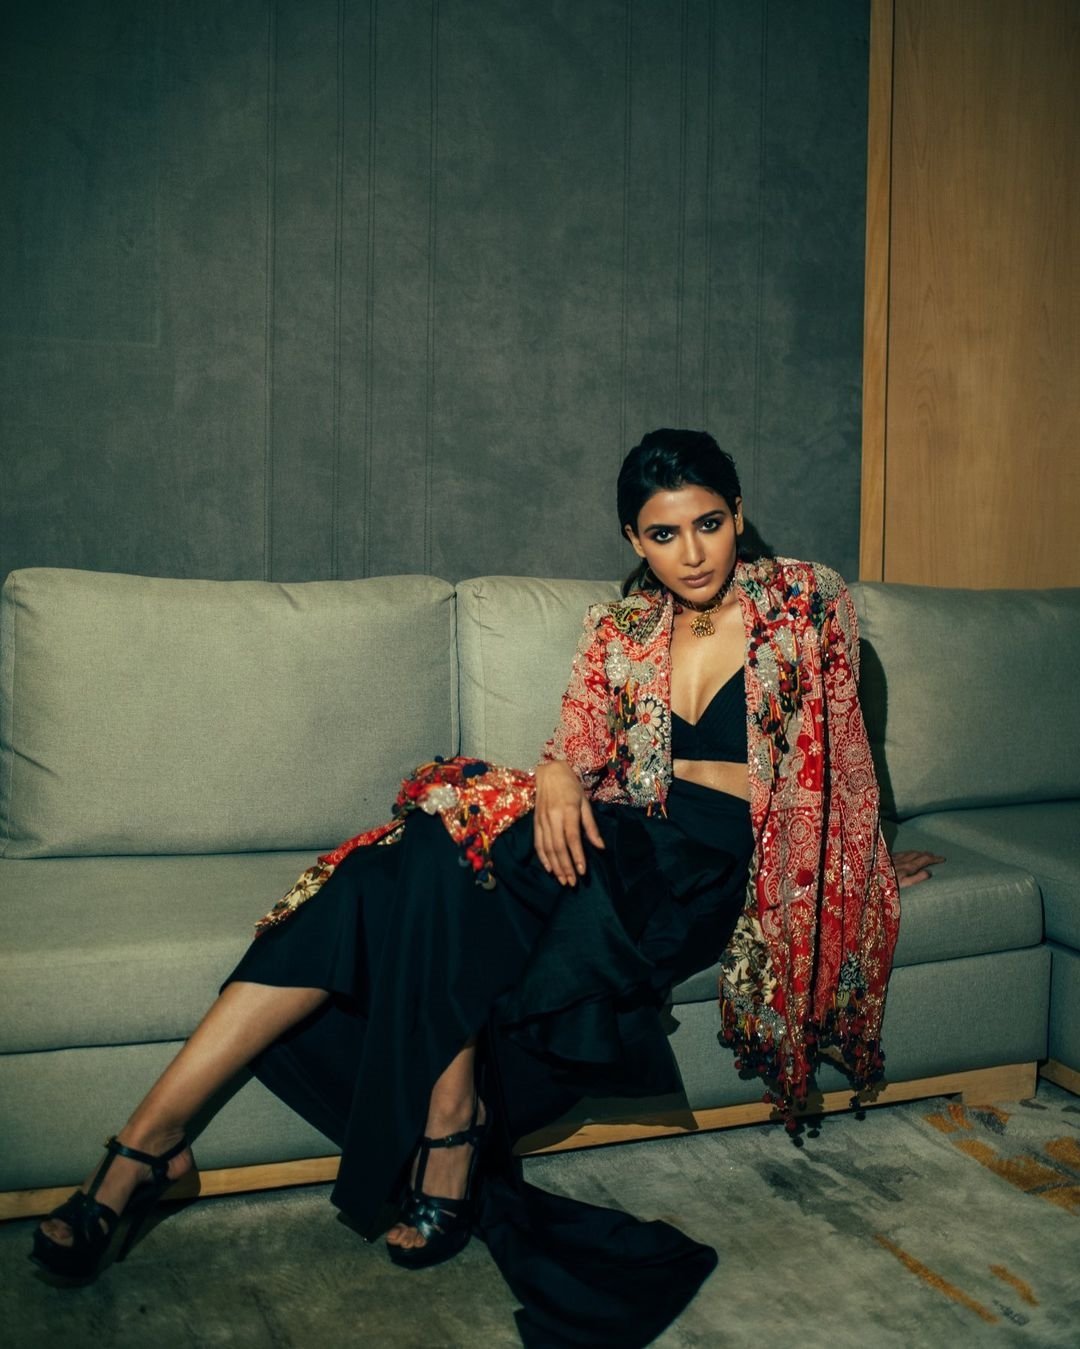 Samantha Ruth Prabhu Has a Bossy Lady Style